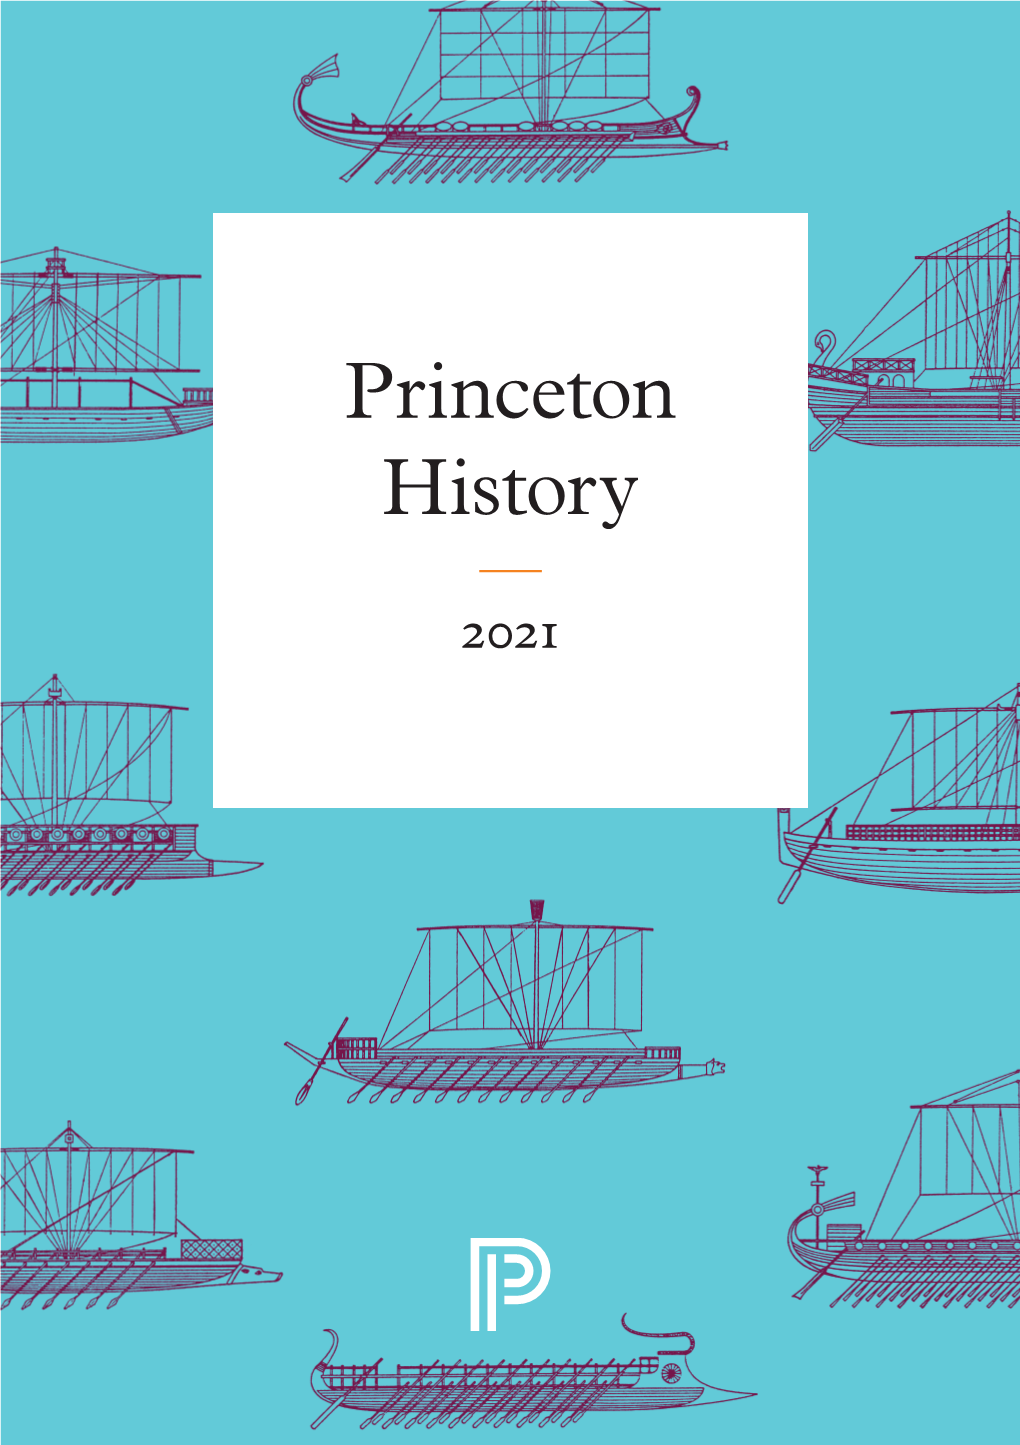 Princeton History 2021